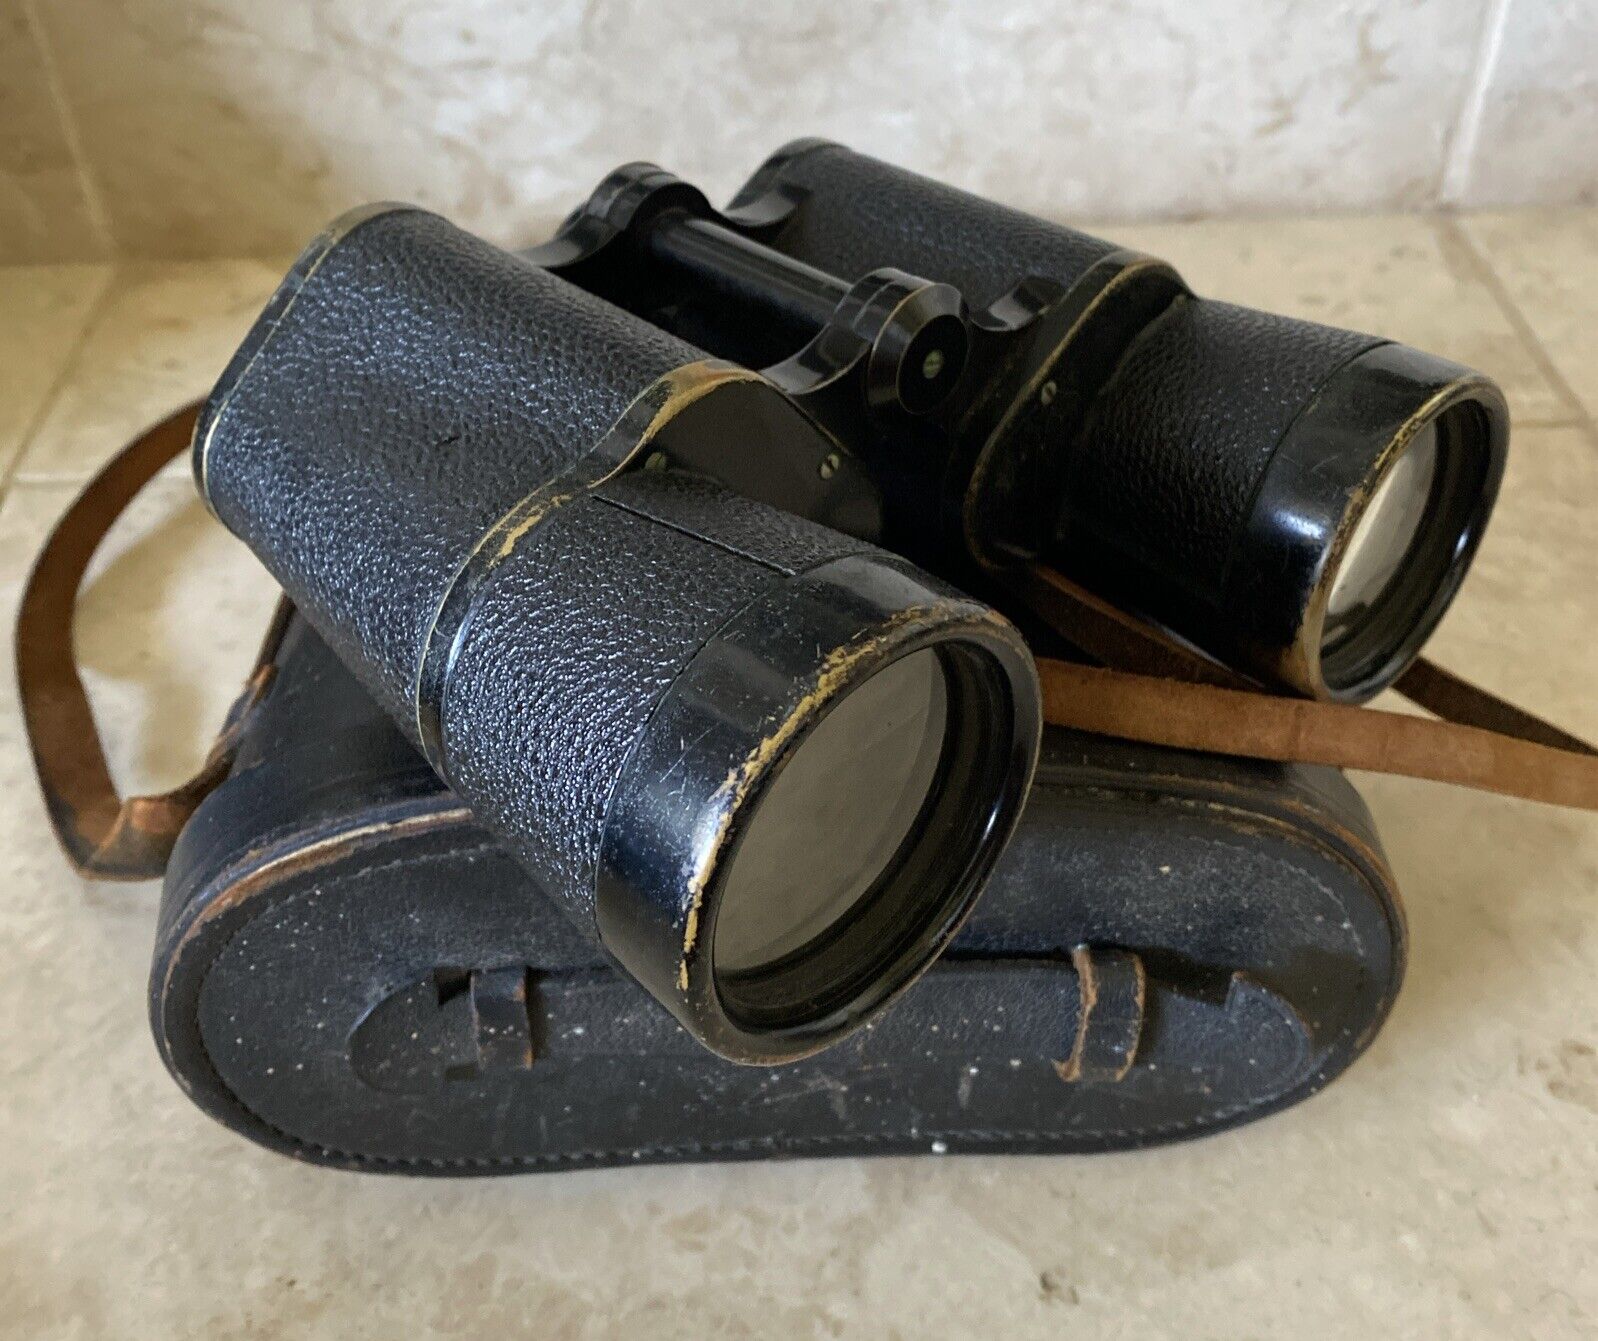 WW2 1943 Binoculars US Navy BUSHIPS 35 Mod 1 - 7x50 National Instruments Texas